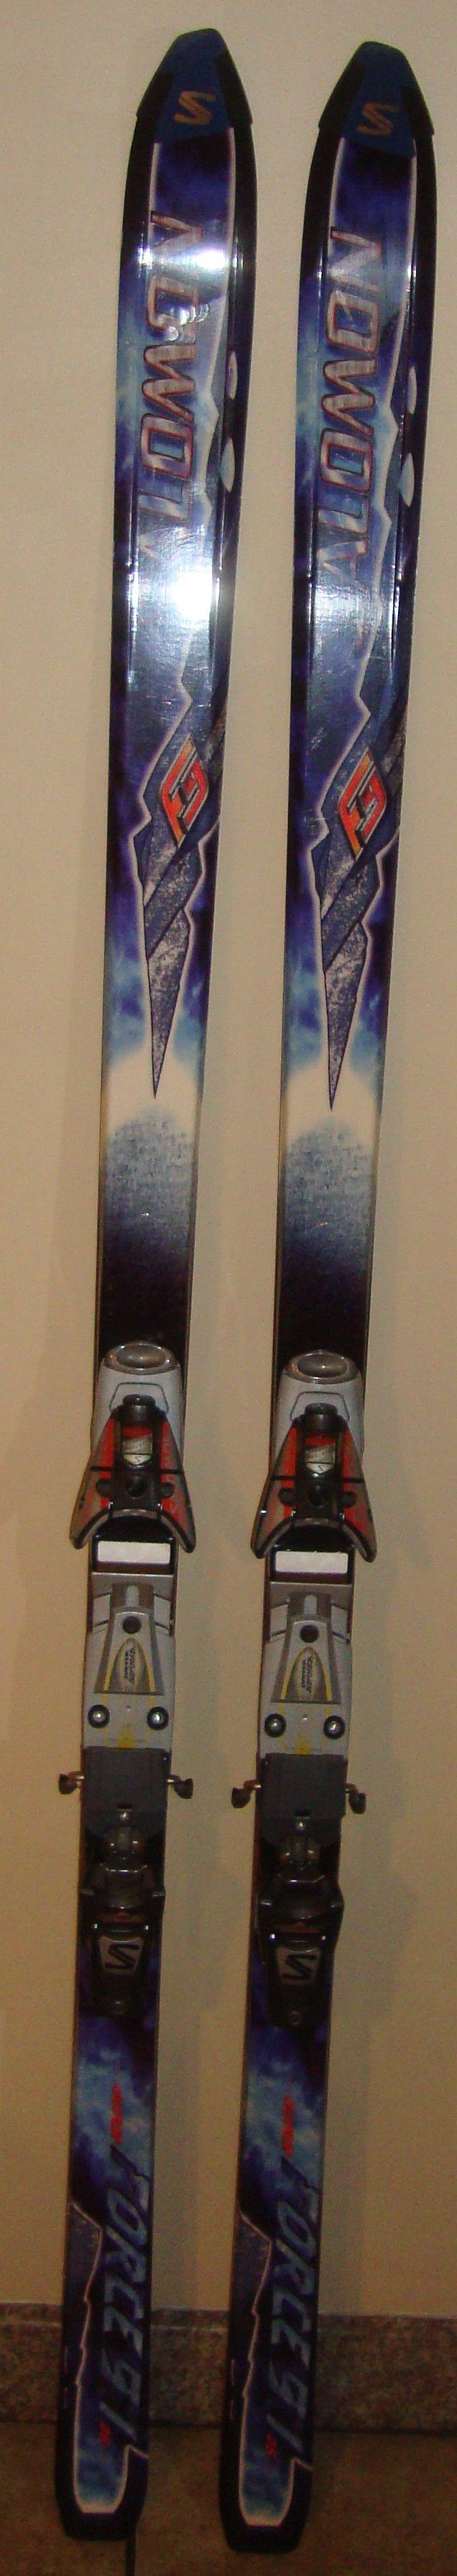 Salomon Super Force 9.1 2s F9 195cm Skis With Salomon 897 Bindings